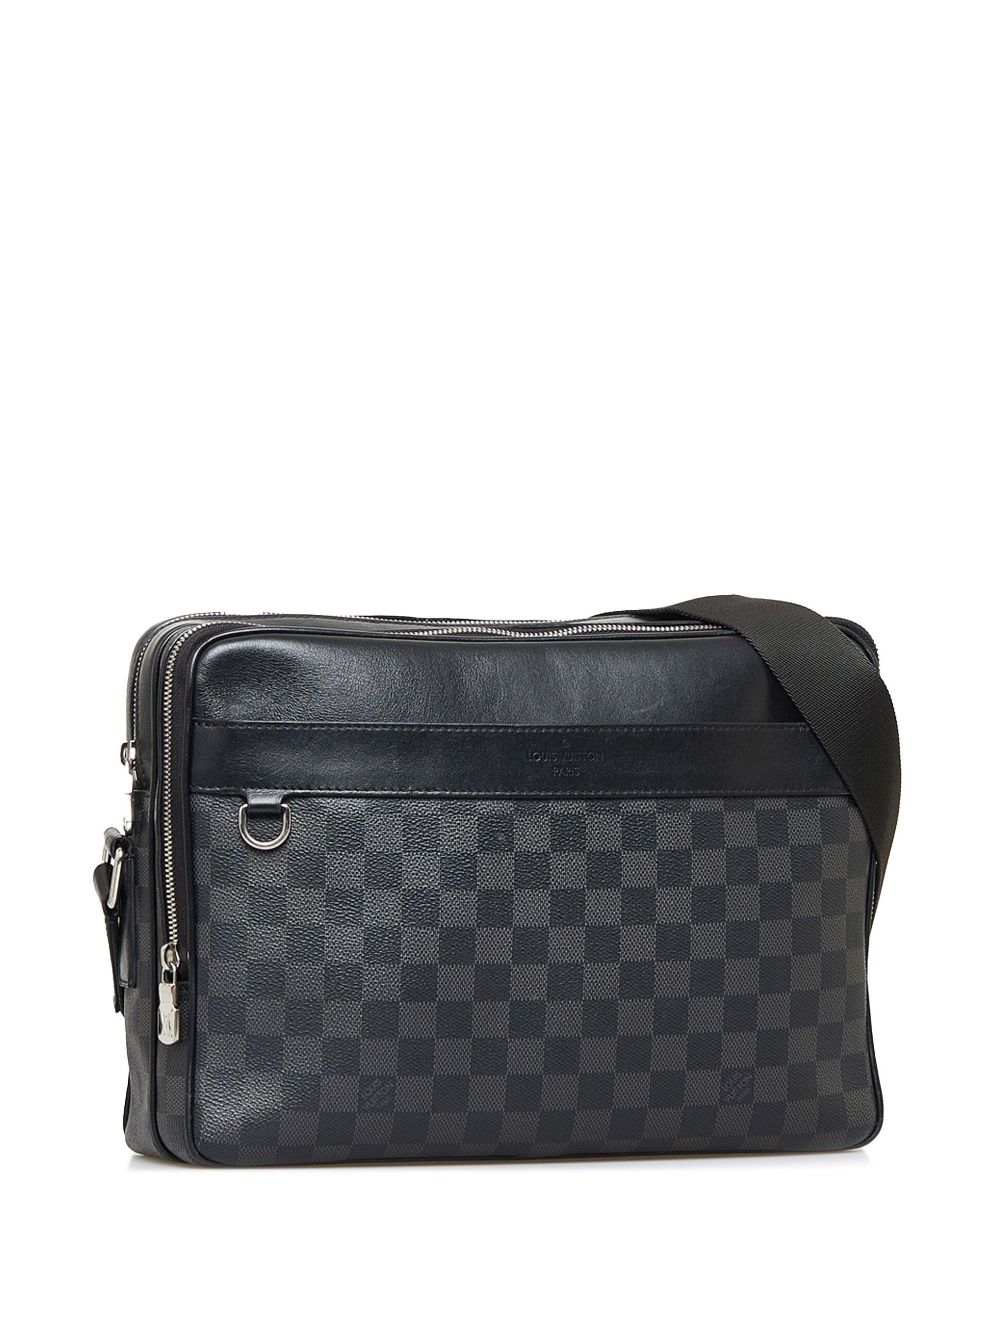 Louis Vuitton Trocadero Messenger Bag - Damier Graphite - Handbags & Purses  - Costume & Dressing Accessories